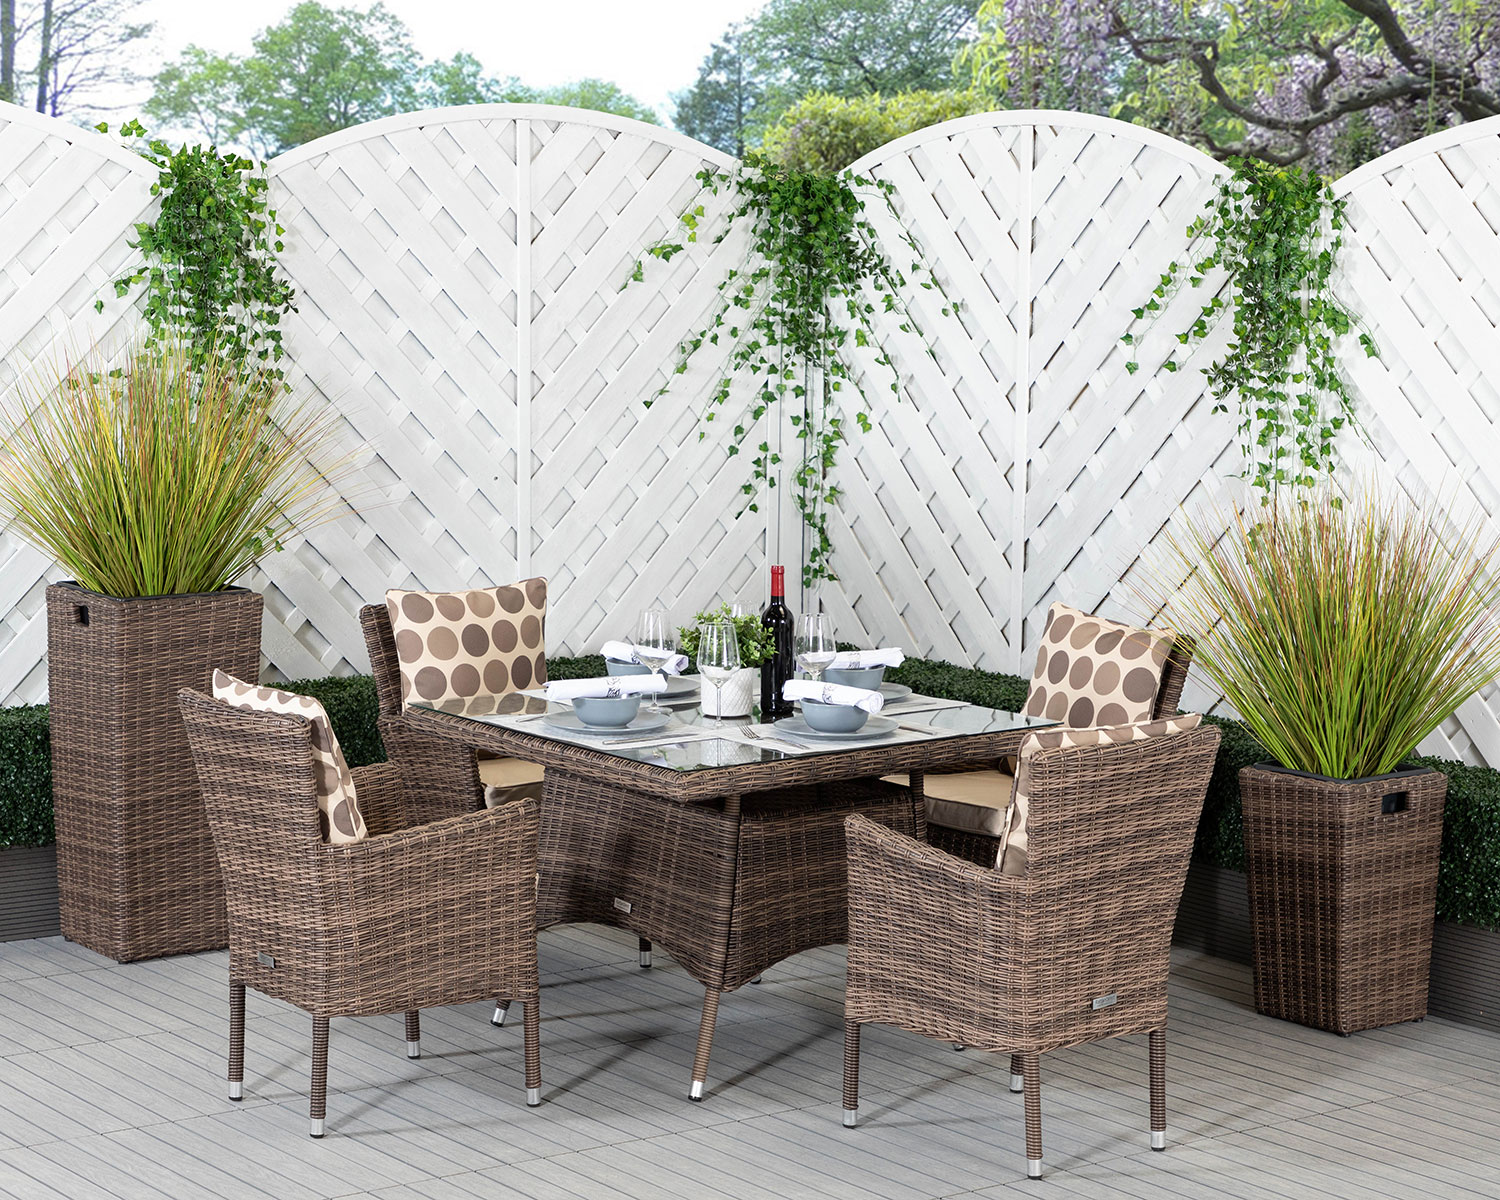 Set cam 091 - rattan garden furniture | patio furniture |conservatory furniture